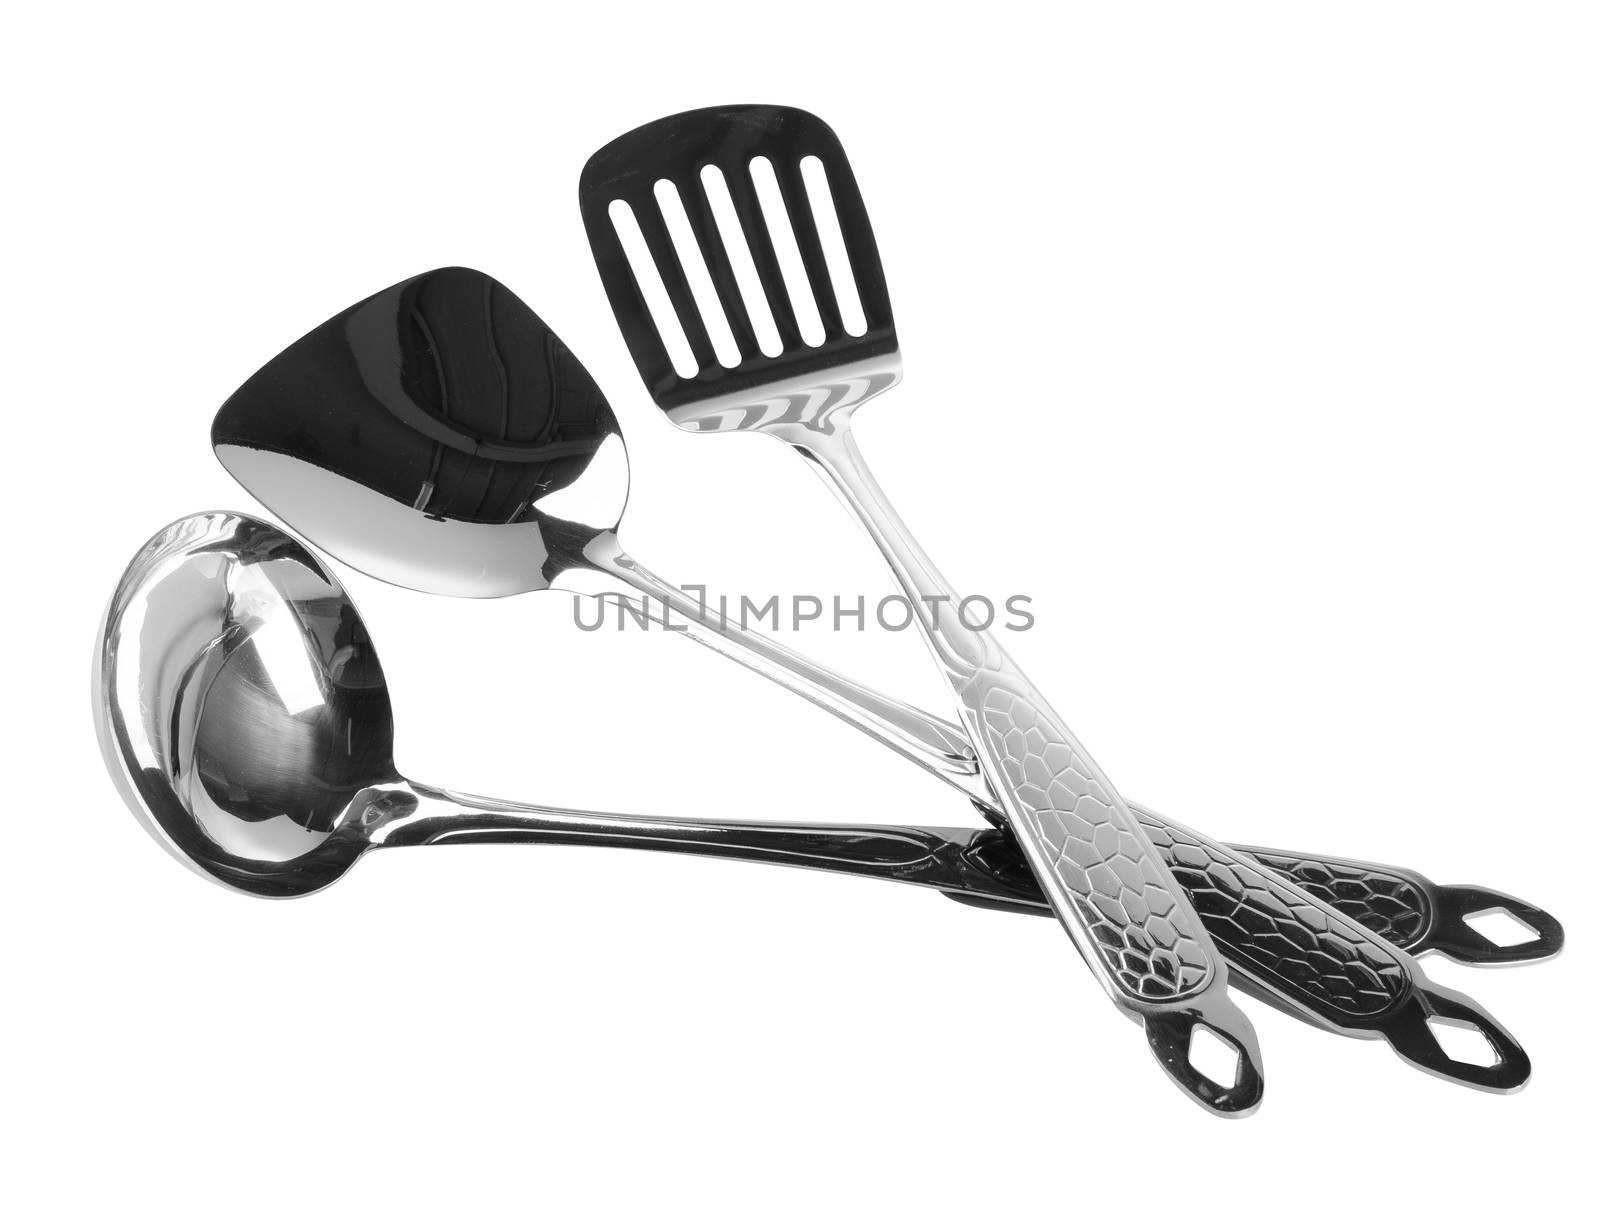 kitchen utensils. kitchen utensilson on background. kitchen utensilson on a background